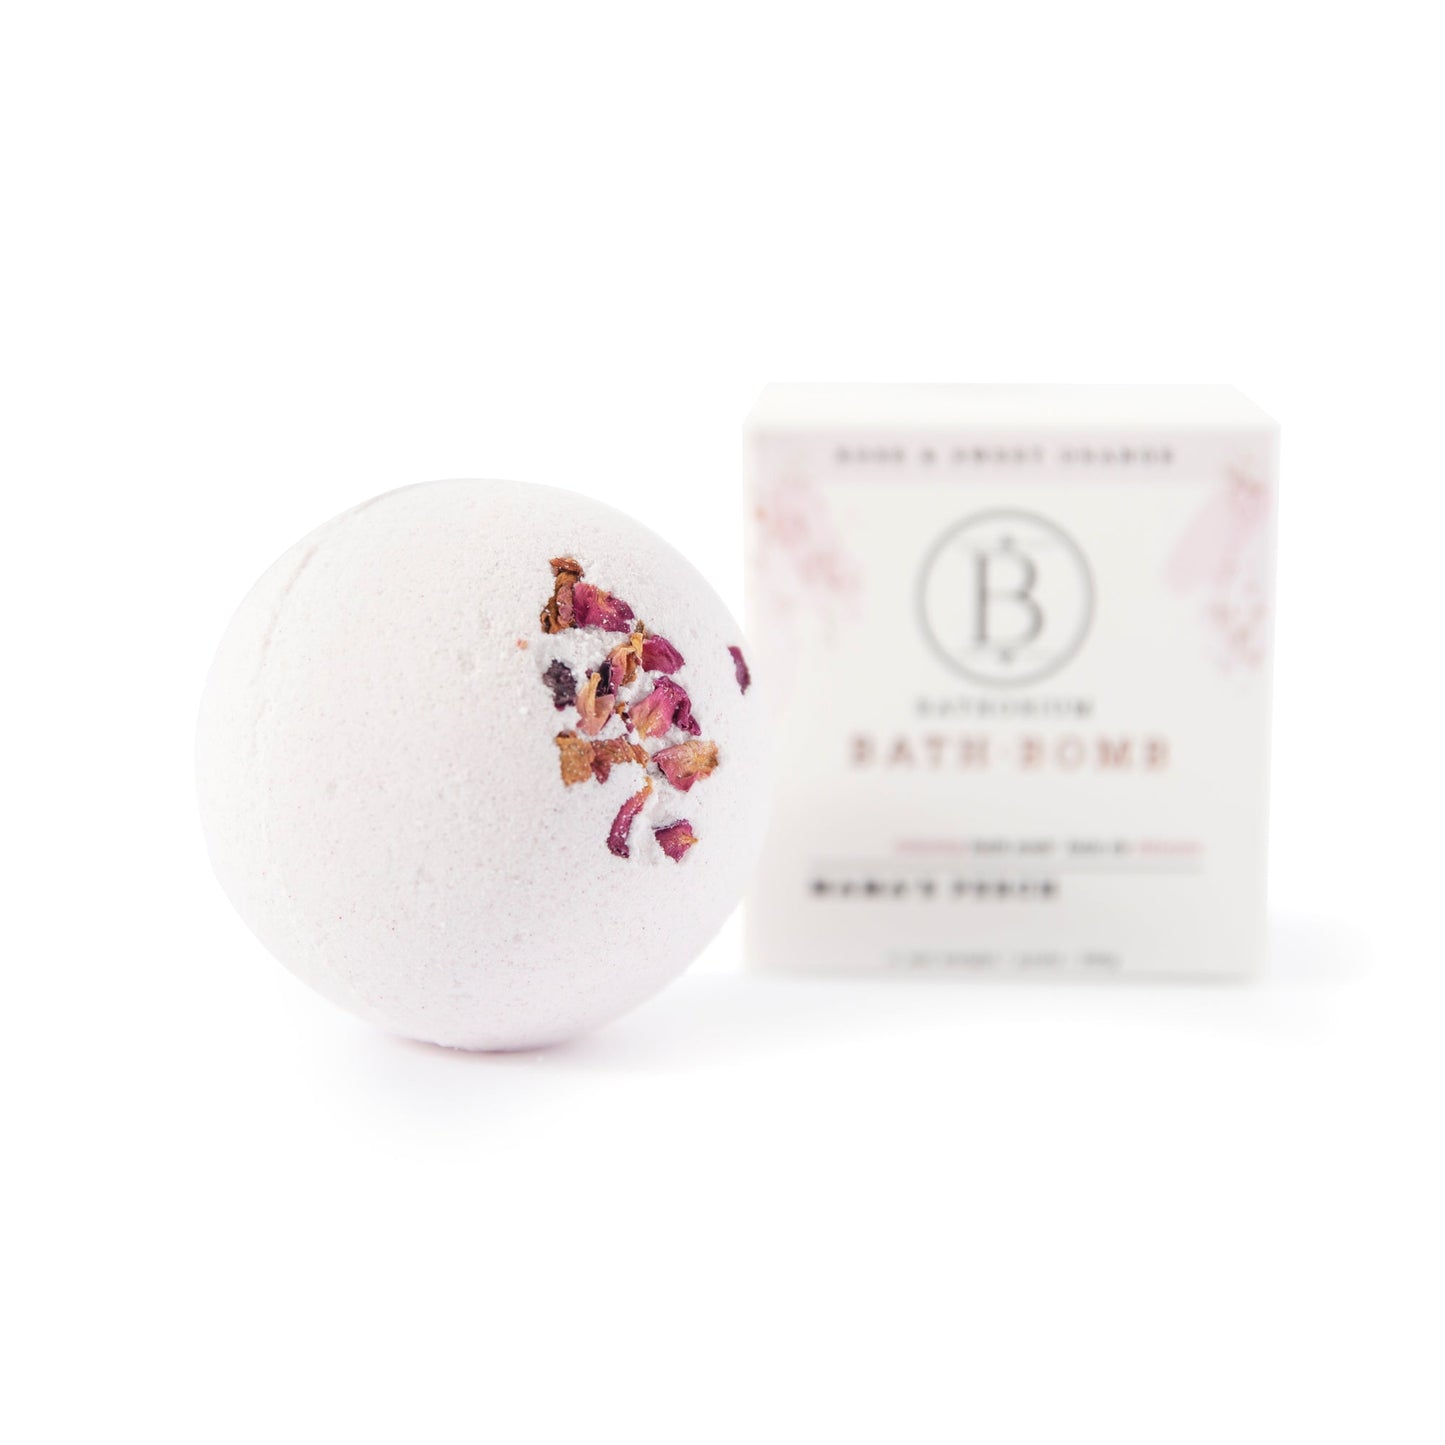 Bathorium - Bathorium Mama's Perch Bath Bomb - ORESTA clean beauty simplified